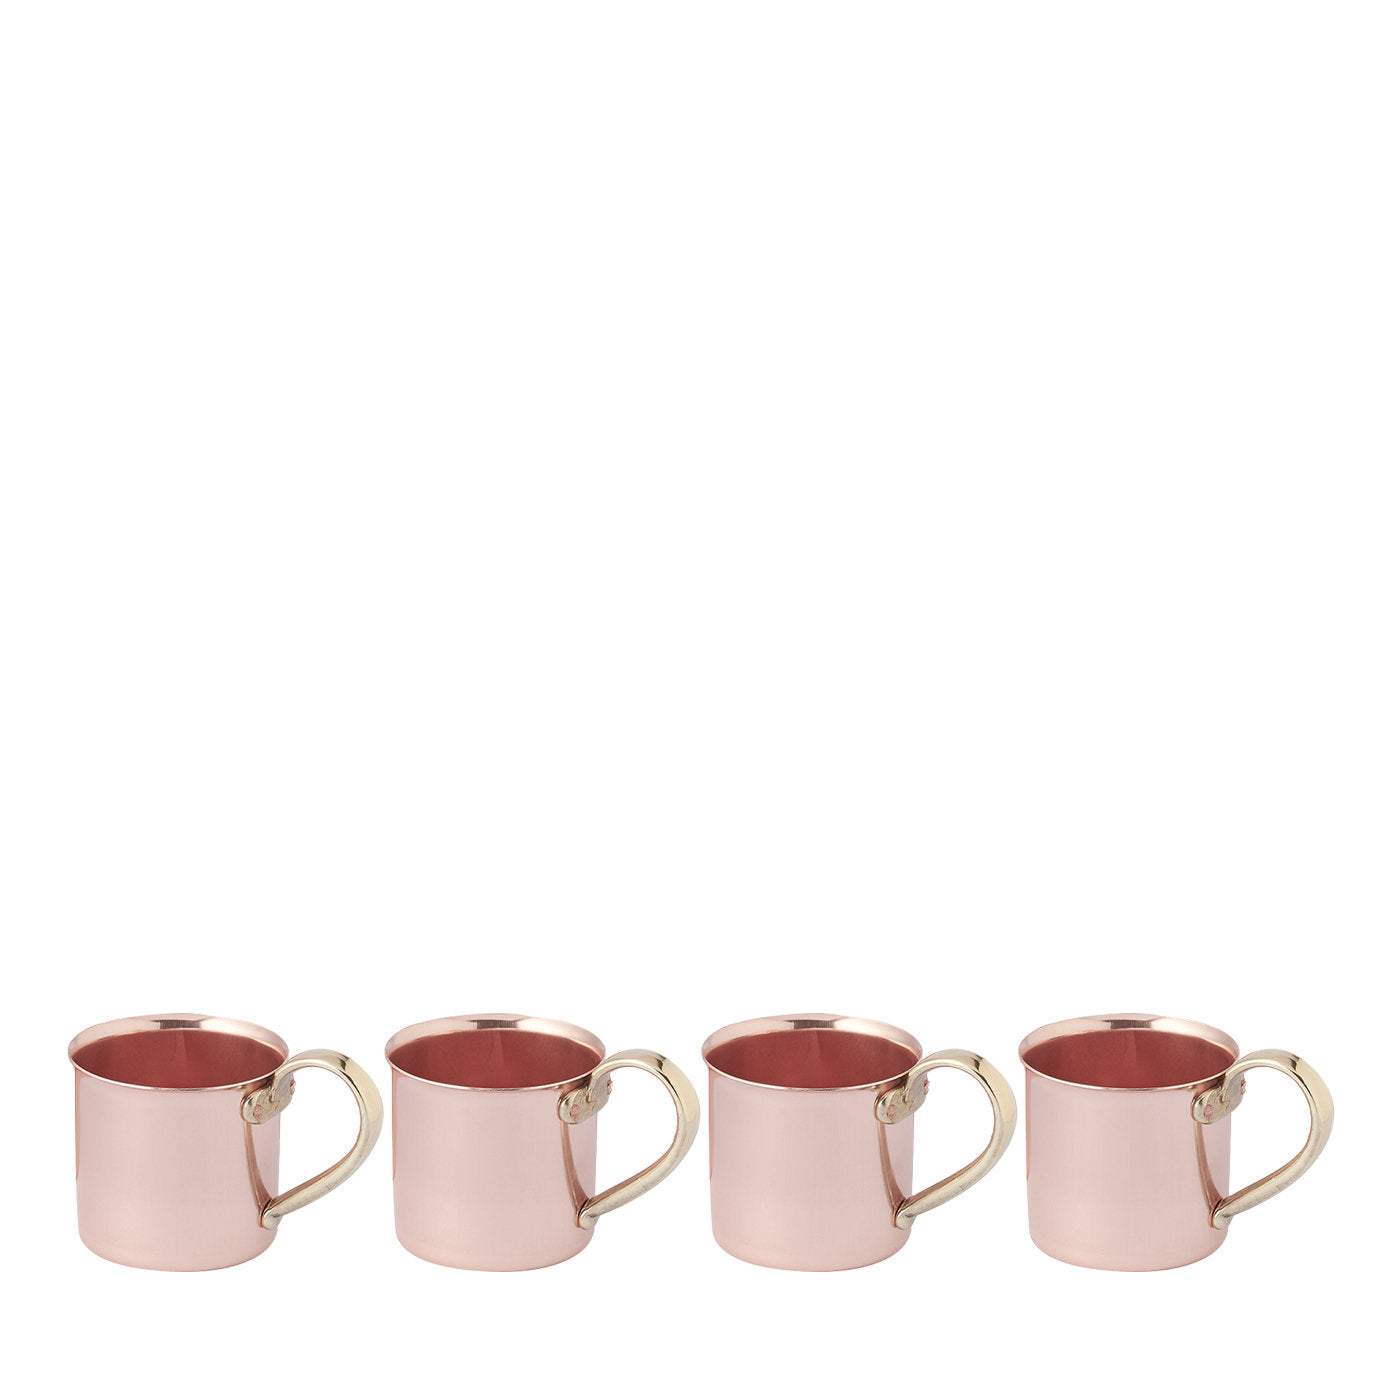 Set of 4 Copper Mugs - Alternative view 1